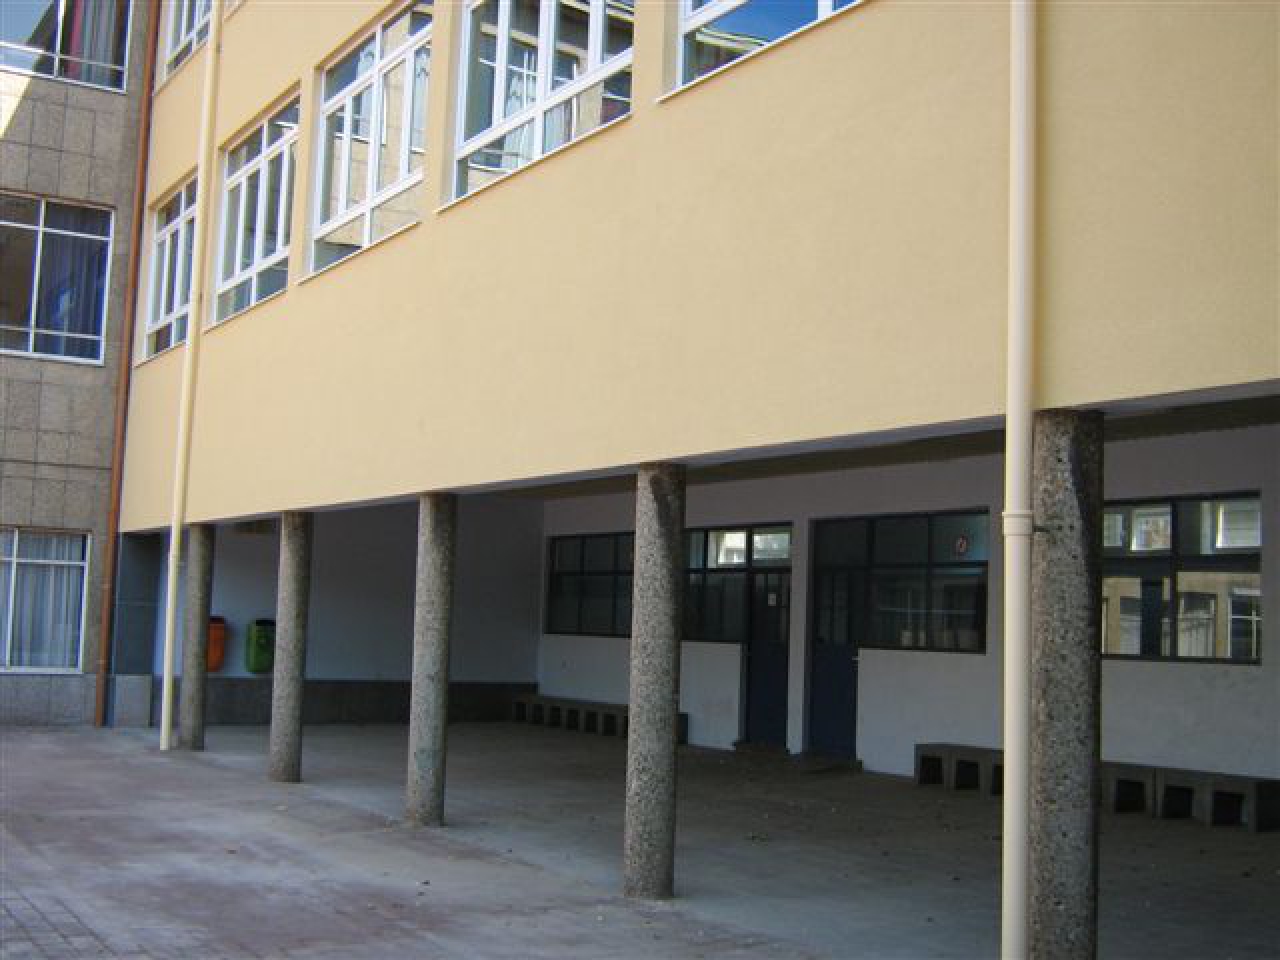 Renovation of the facades of a school building